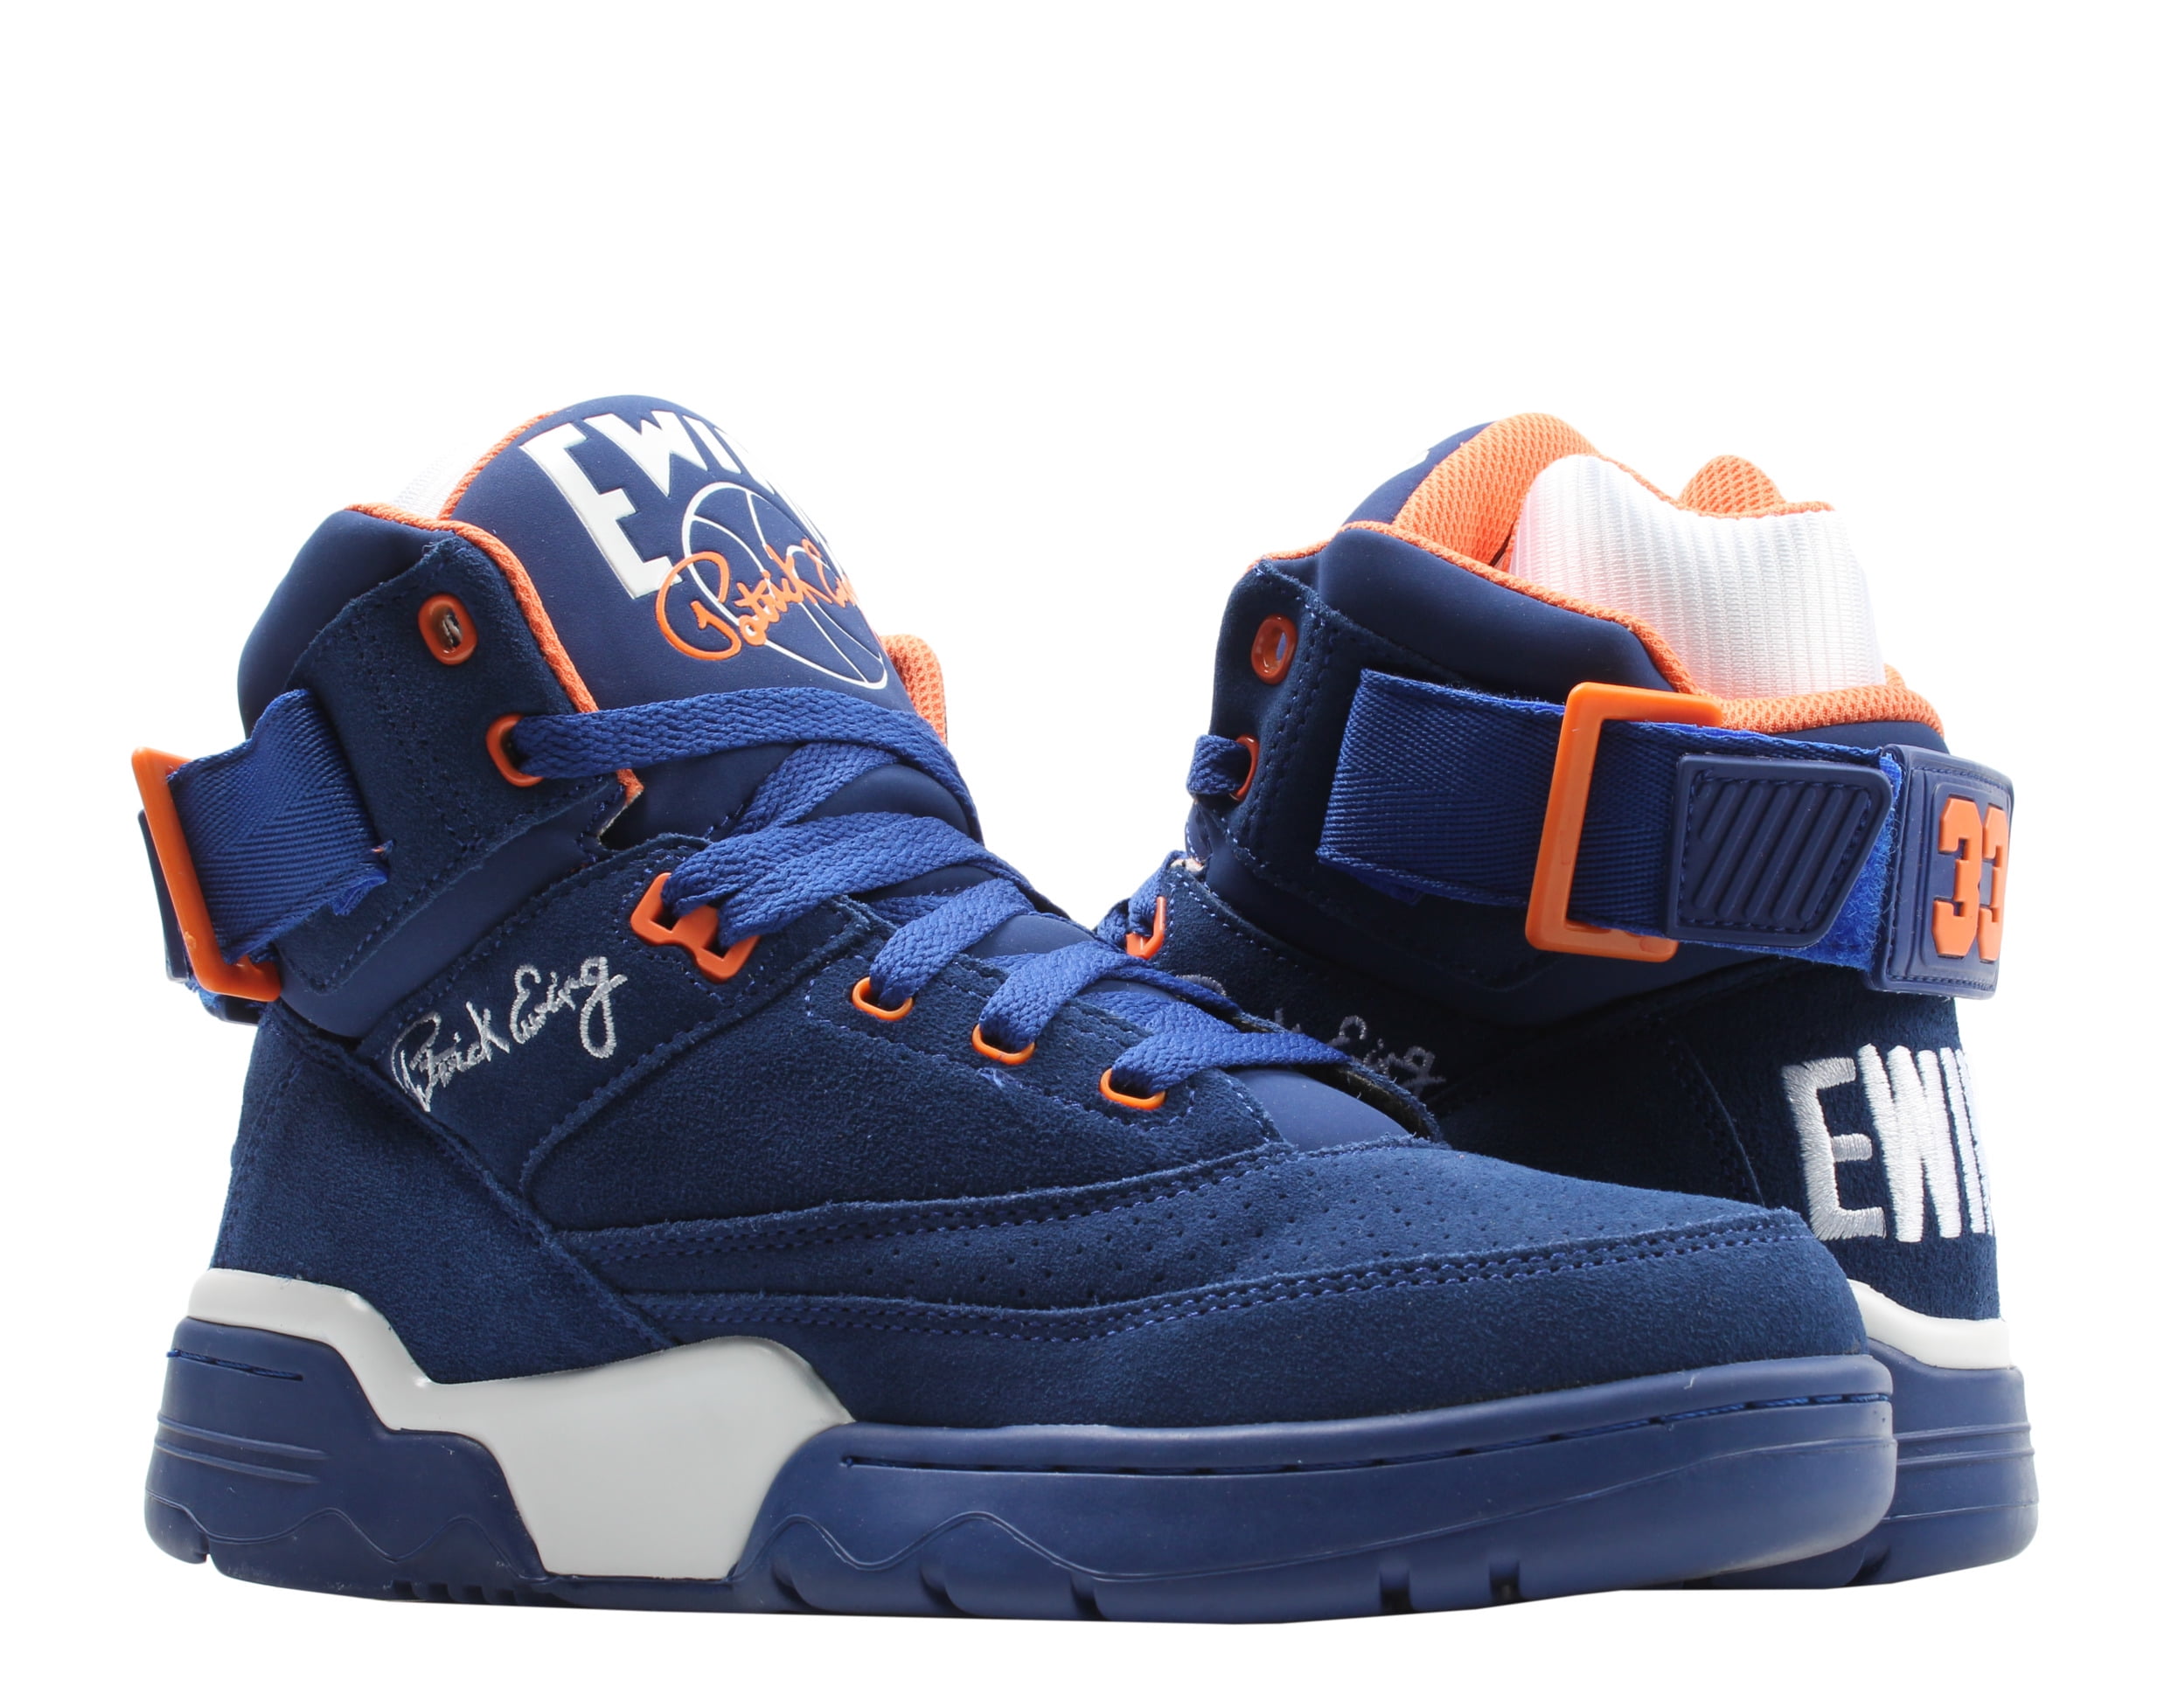 Ewing 33 HI - We want the return of Patrick Ewing shoes